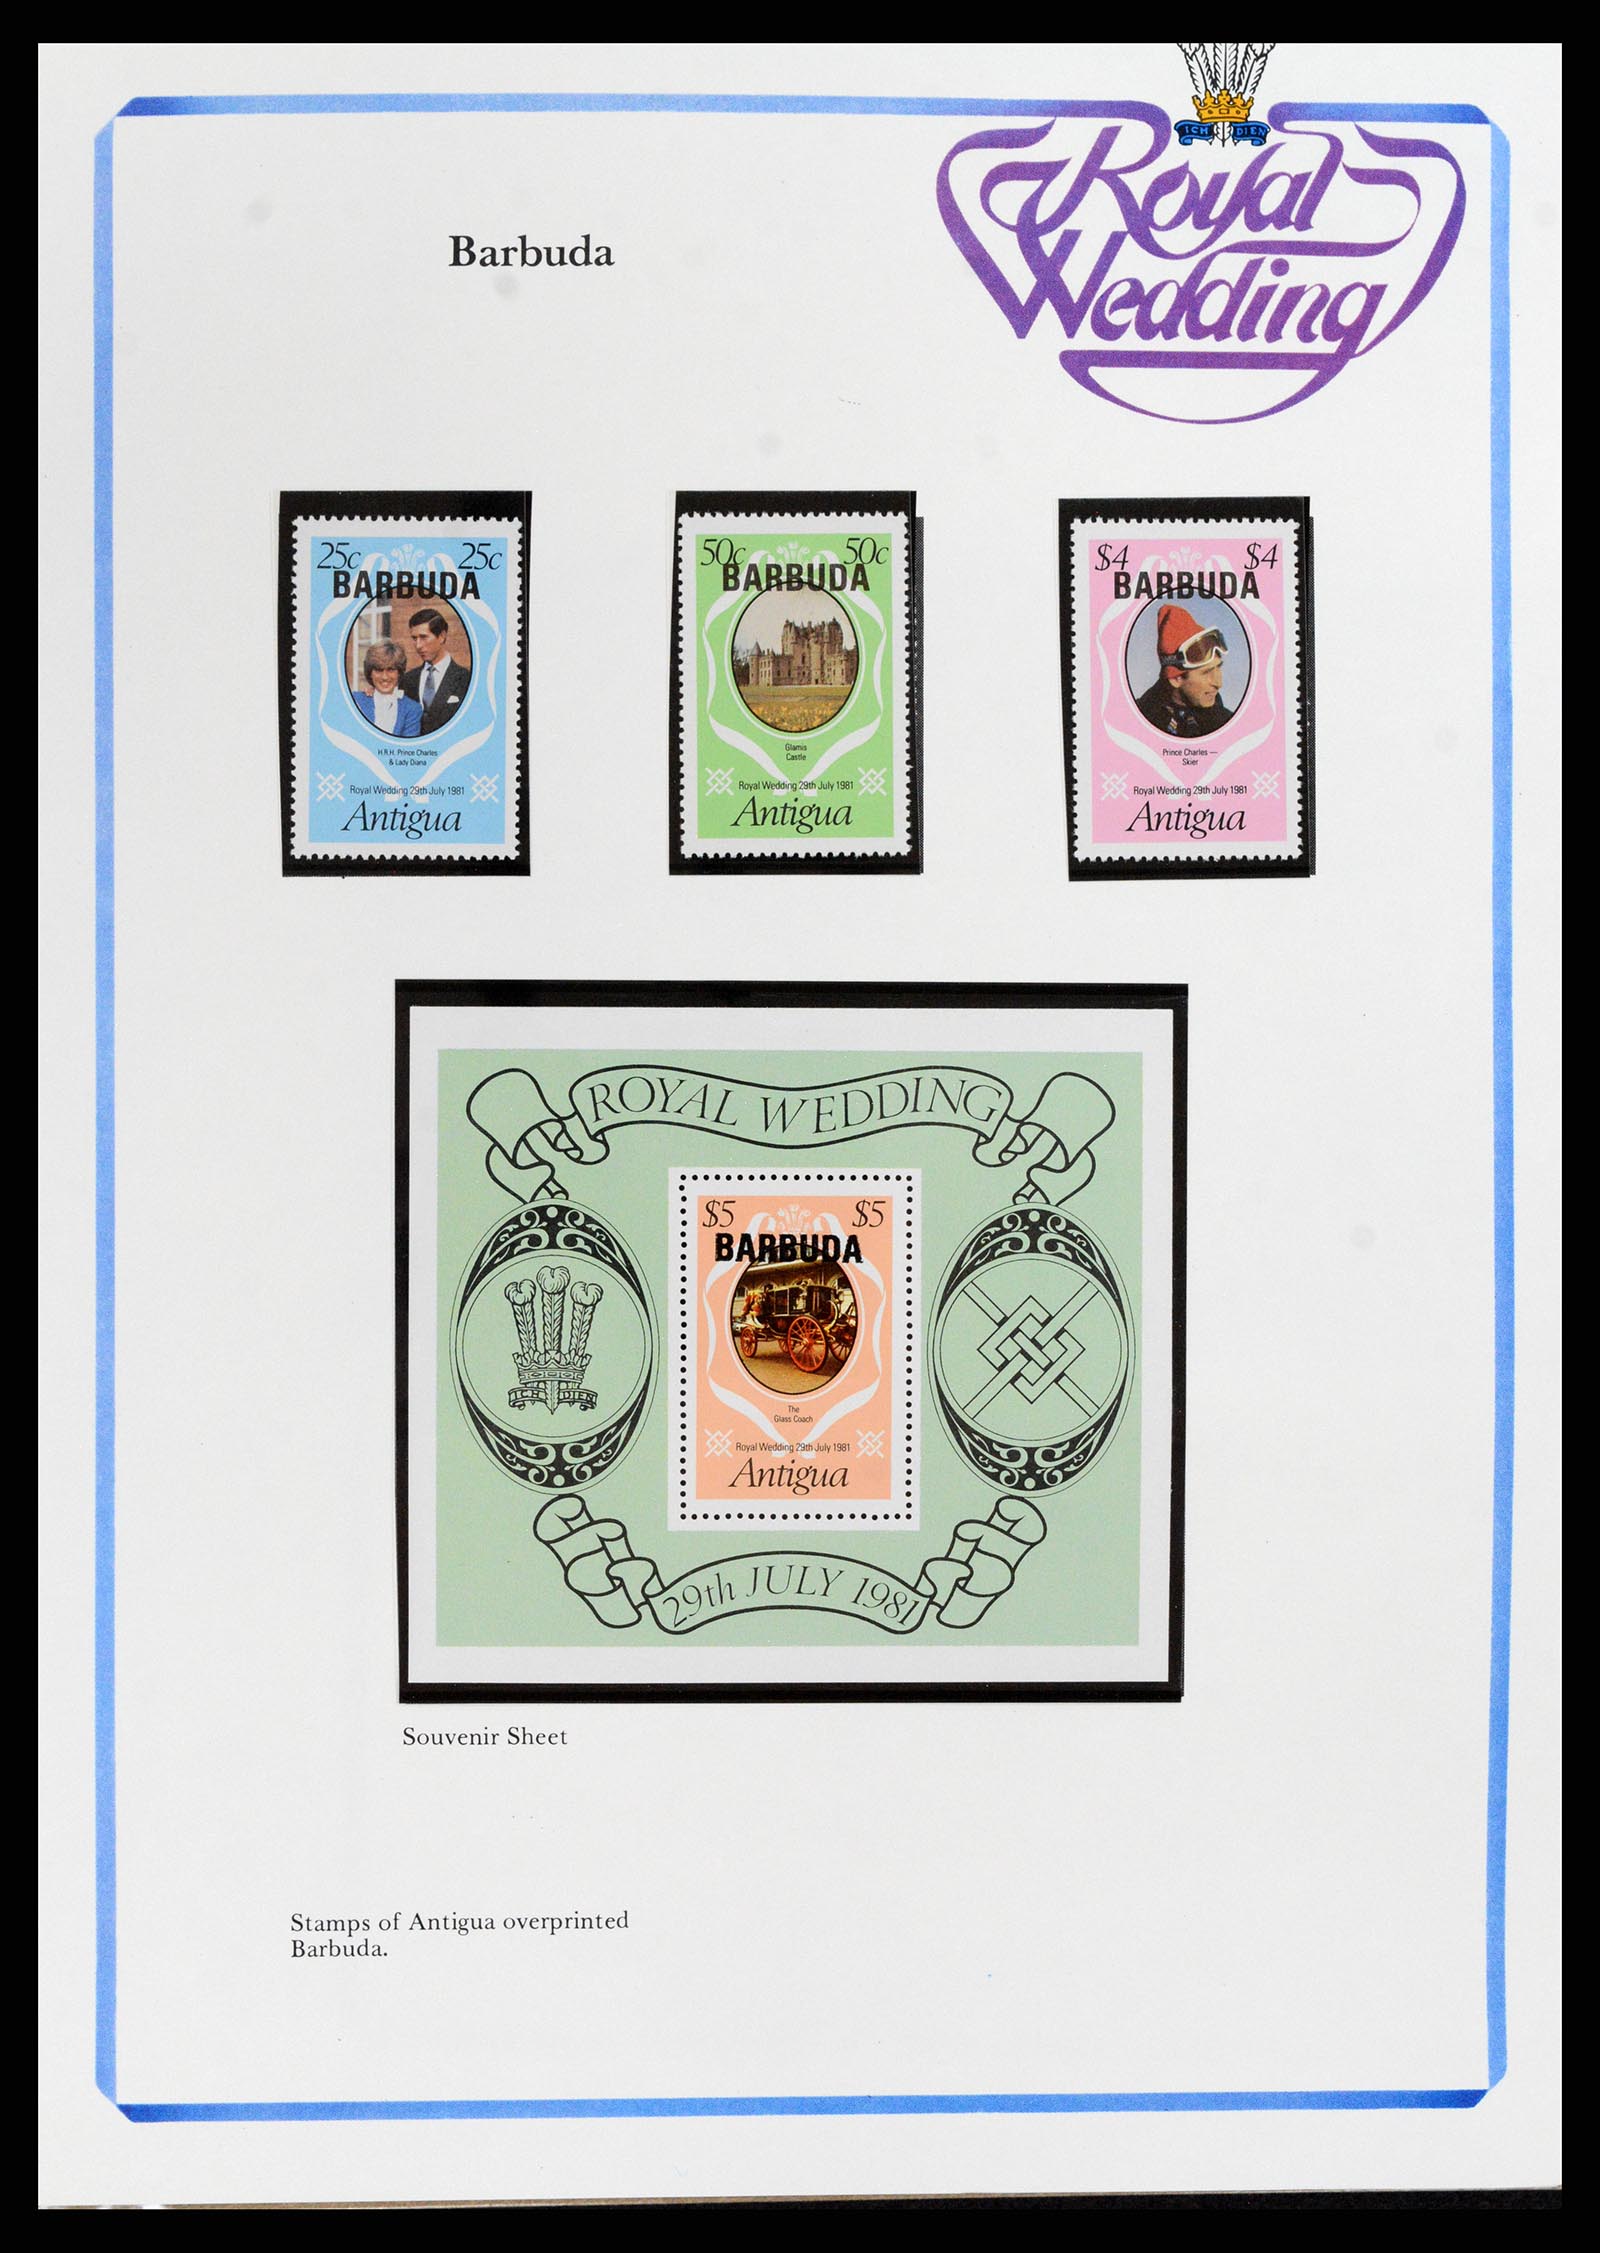 37818 020 - Stamp Collection 37818 Royal Wedding 1981.